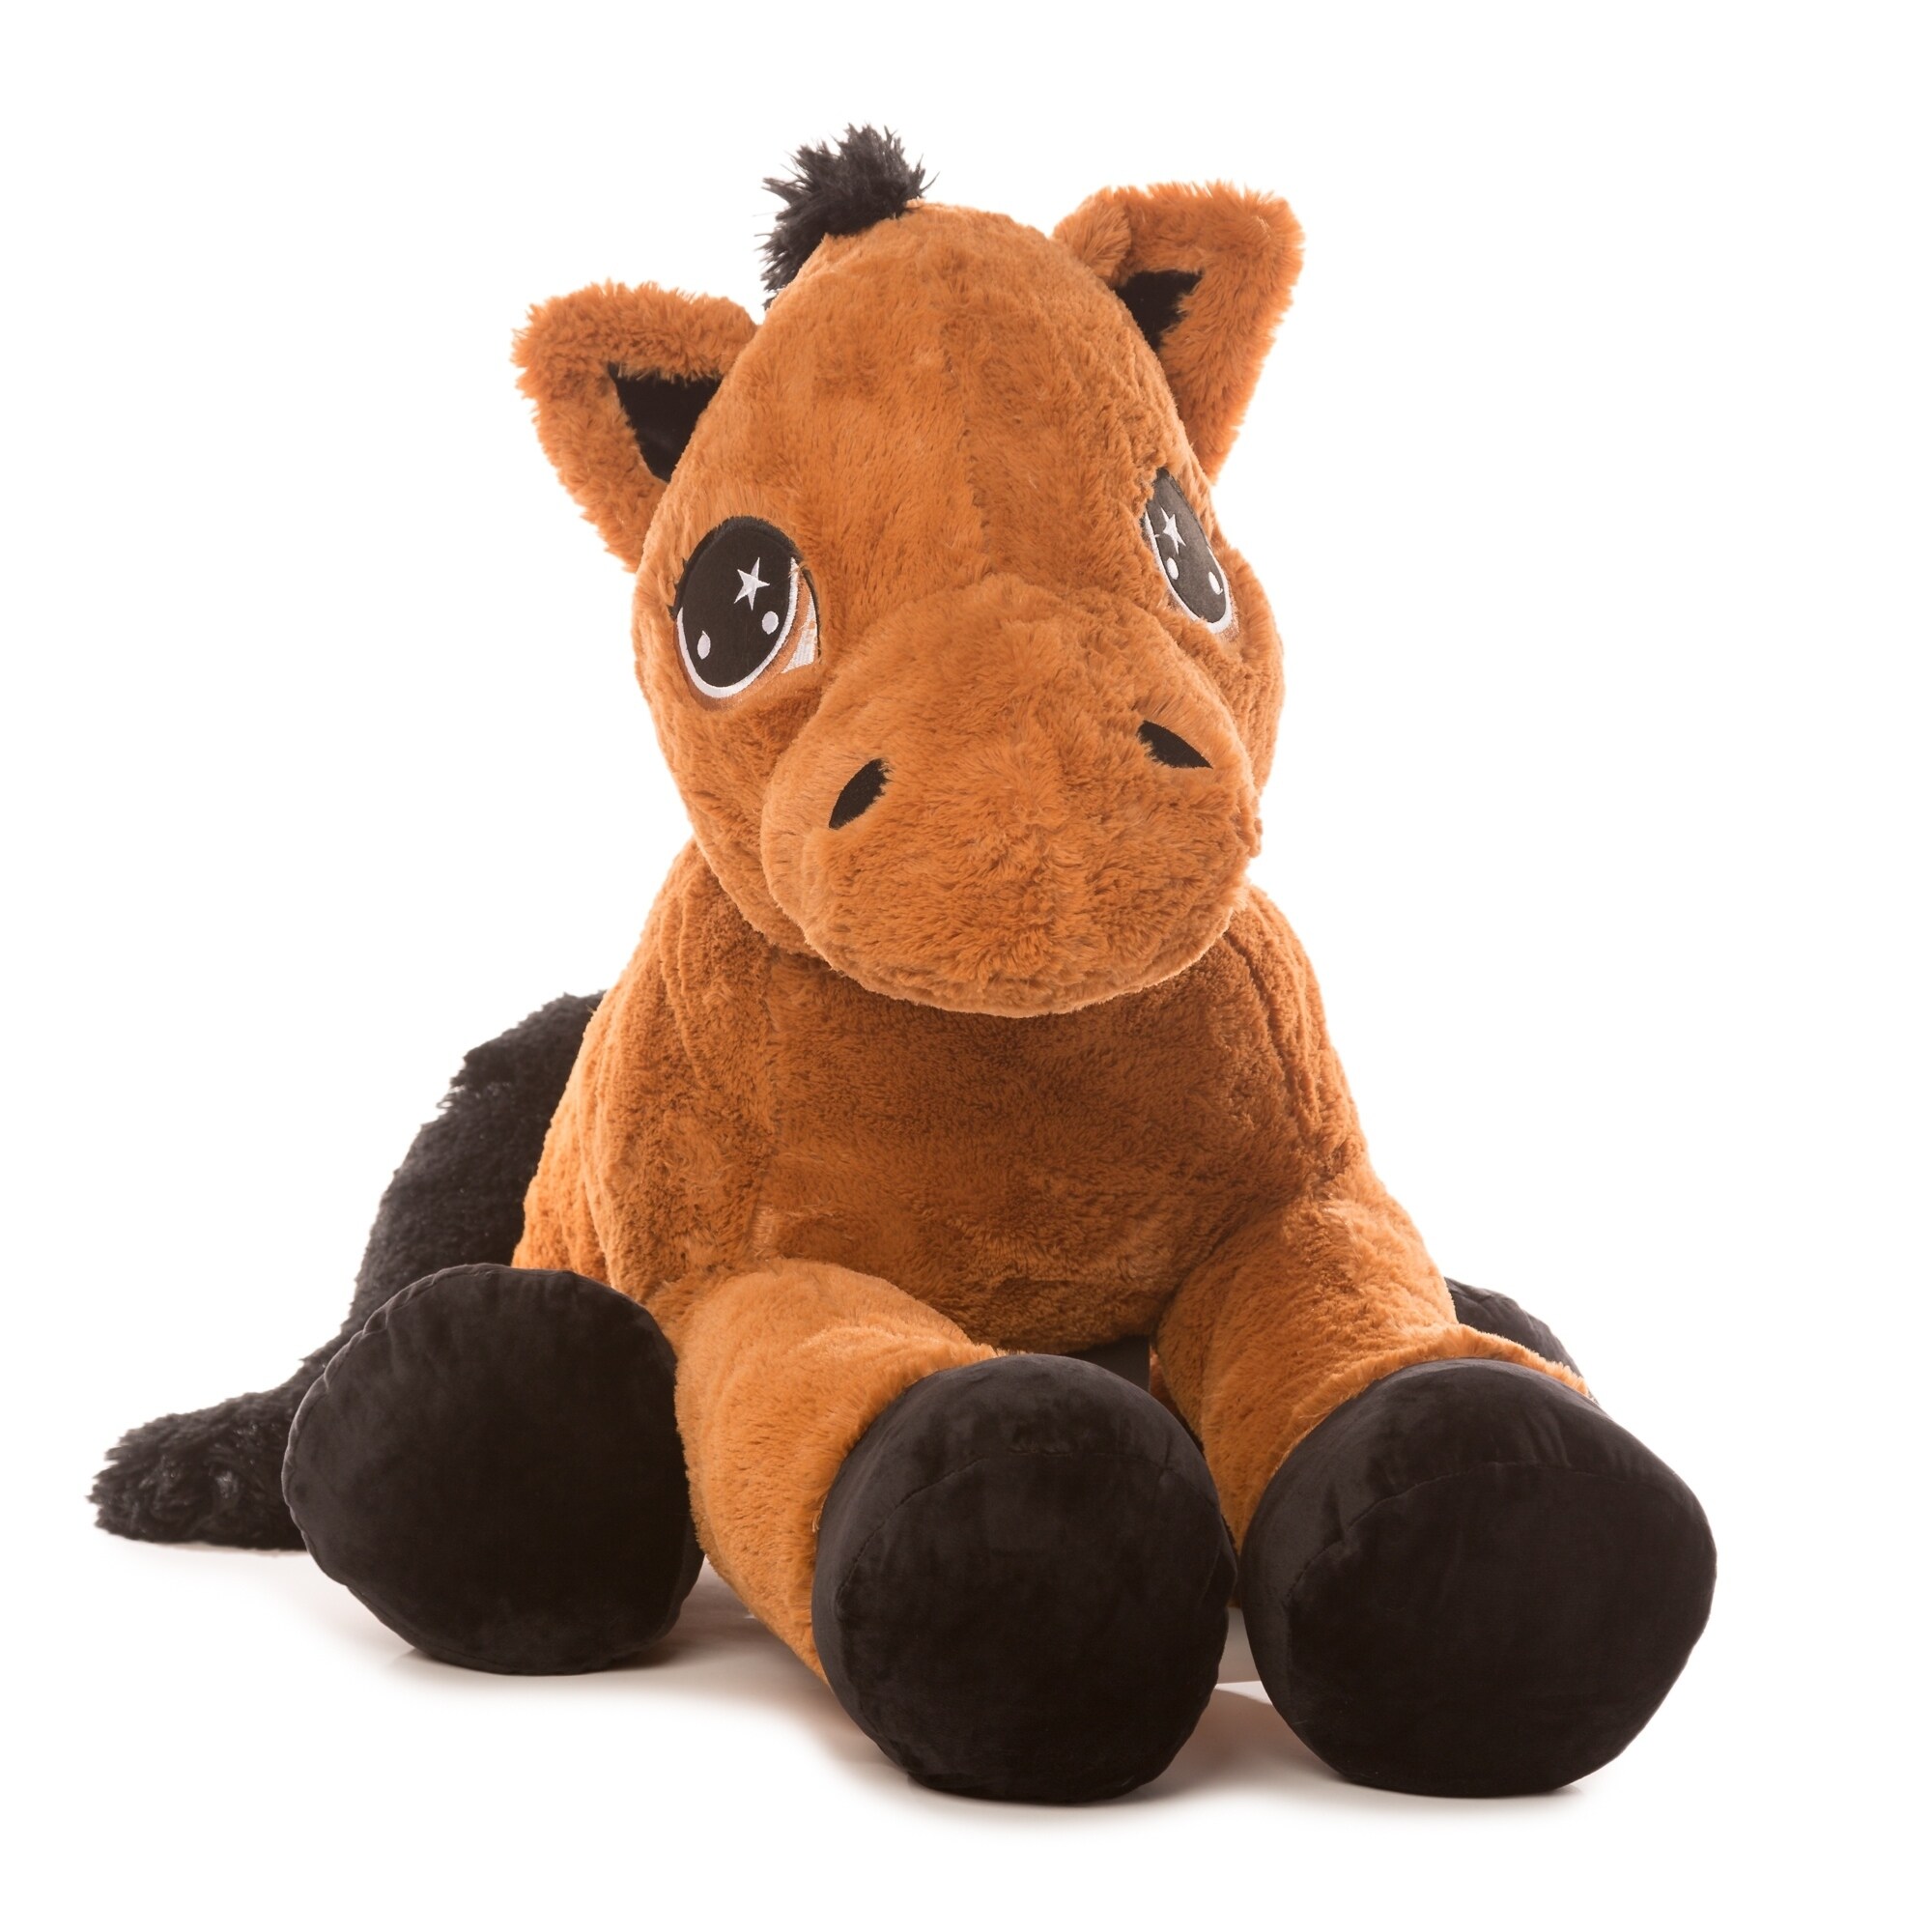 jumbo stuffed horse